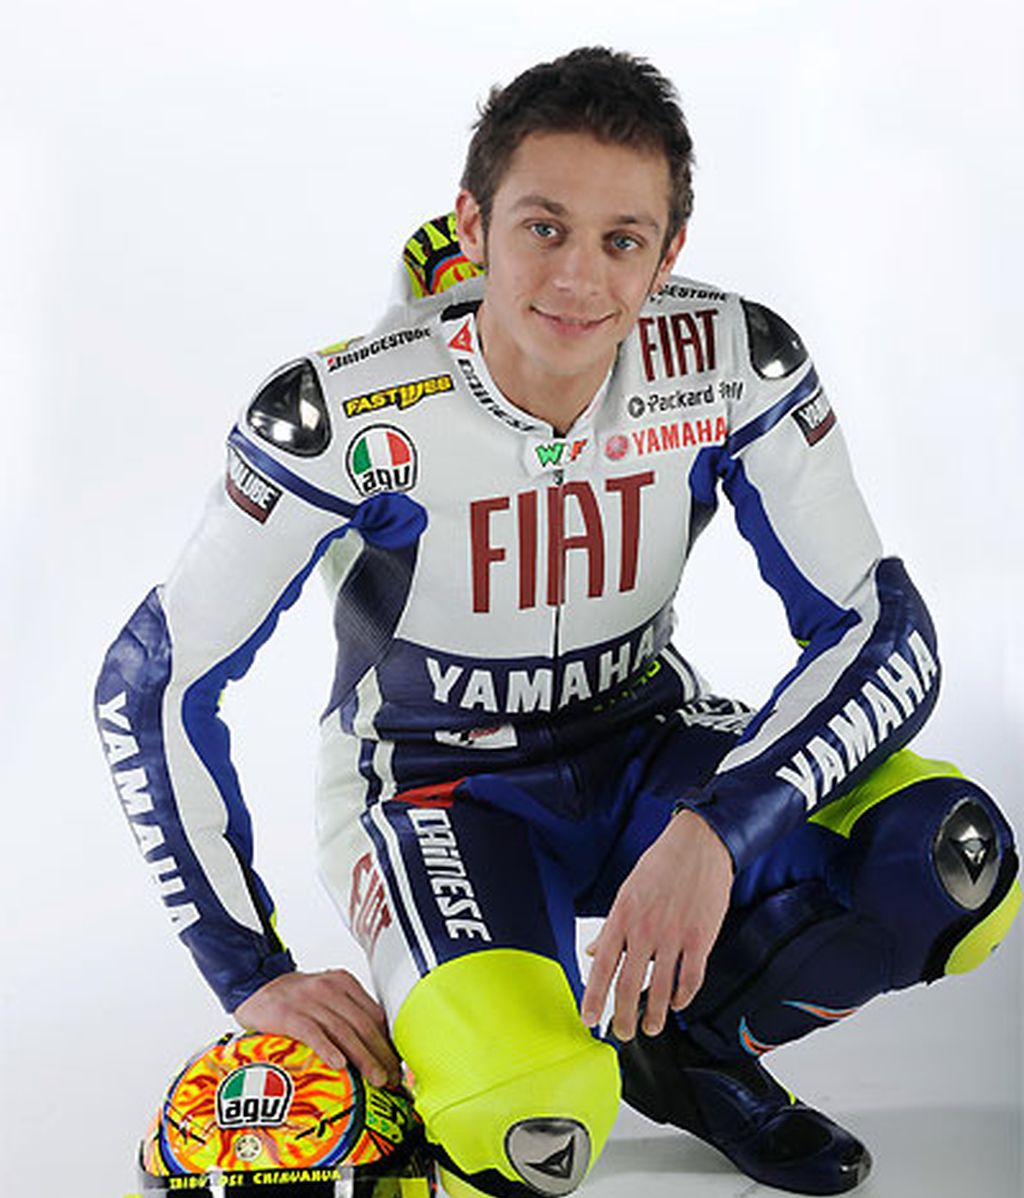 Lorenzo luce nueva moto y nuevo casco